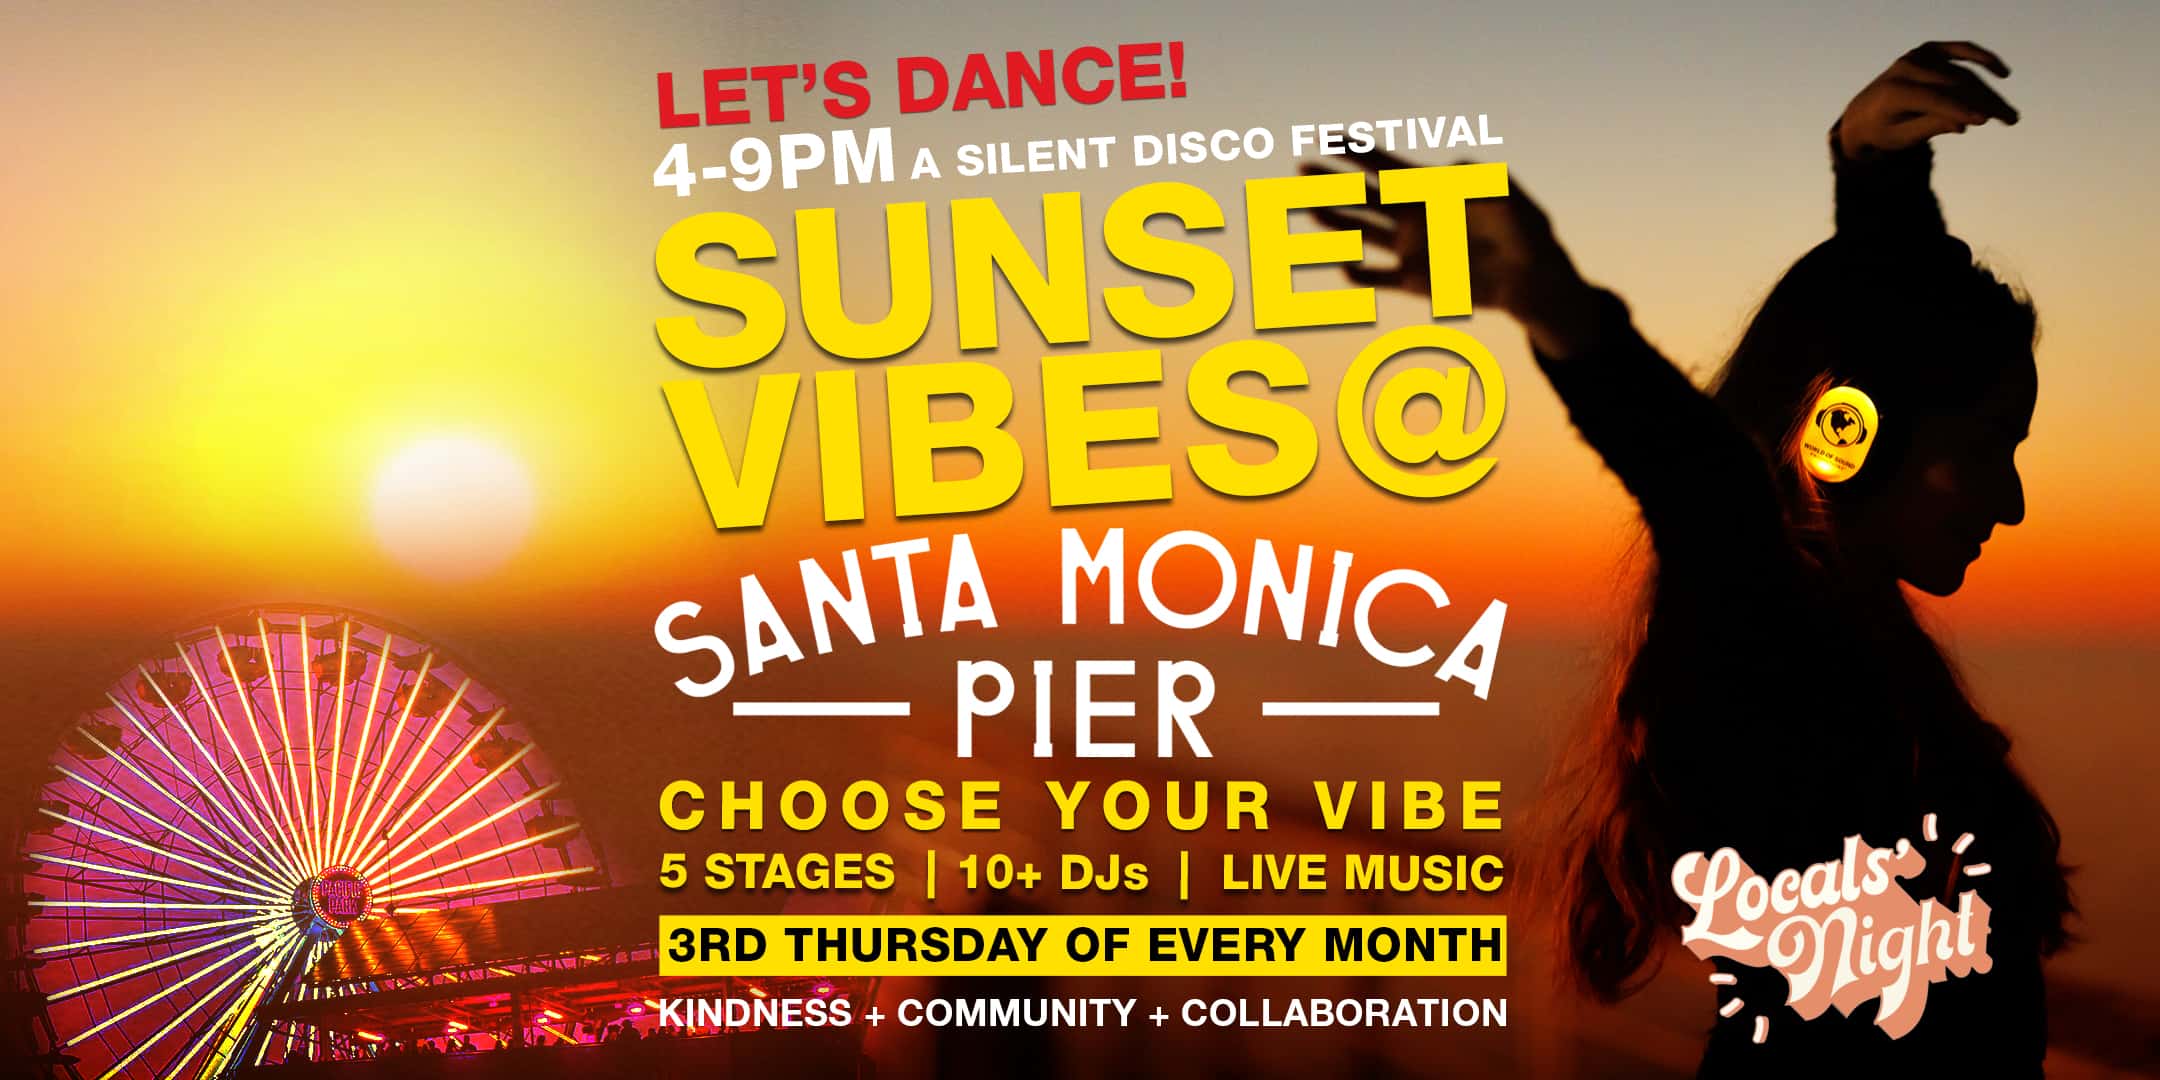 Sunset Vibes Silent Disco @ Santa Monica